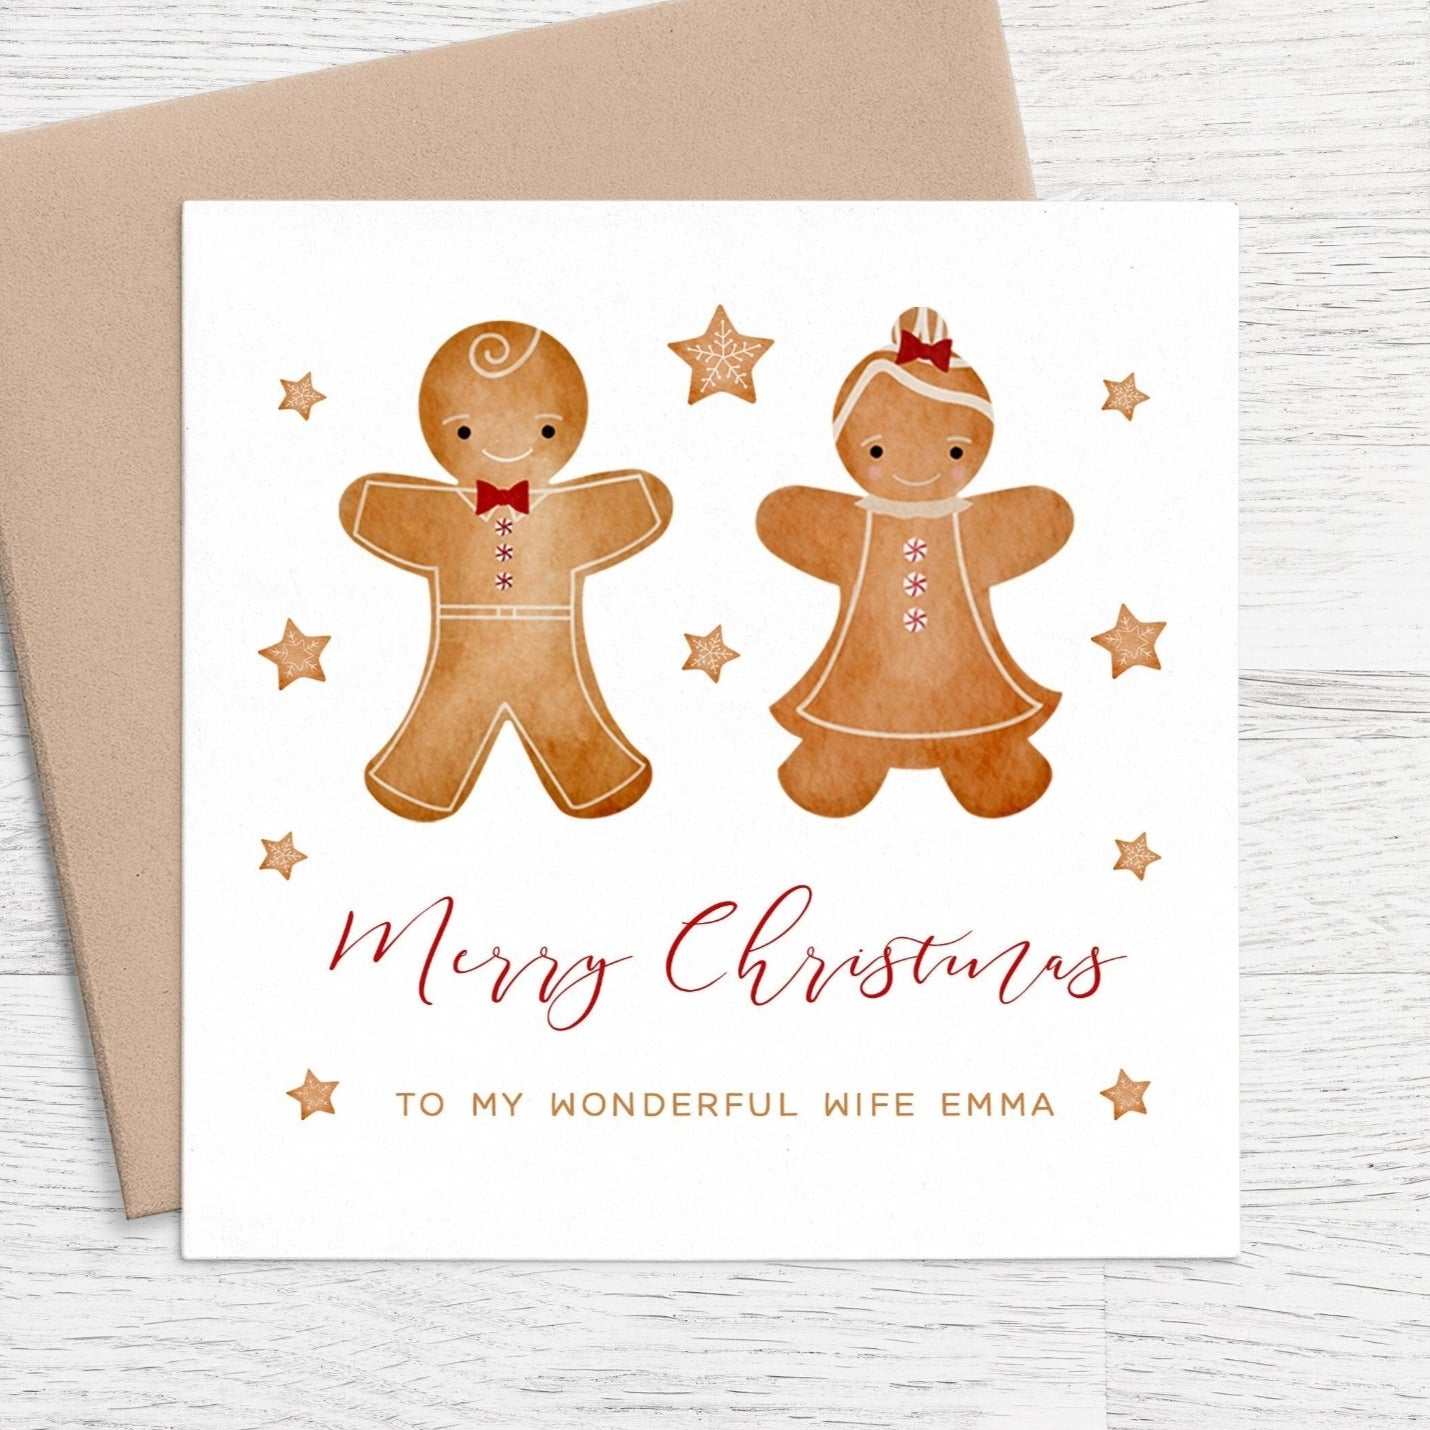 gingerbread merry christmas card for wife personalised kraft brown envelope matte white cardstock